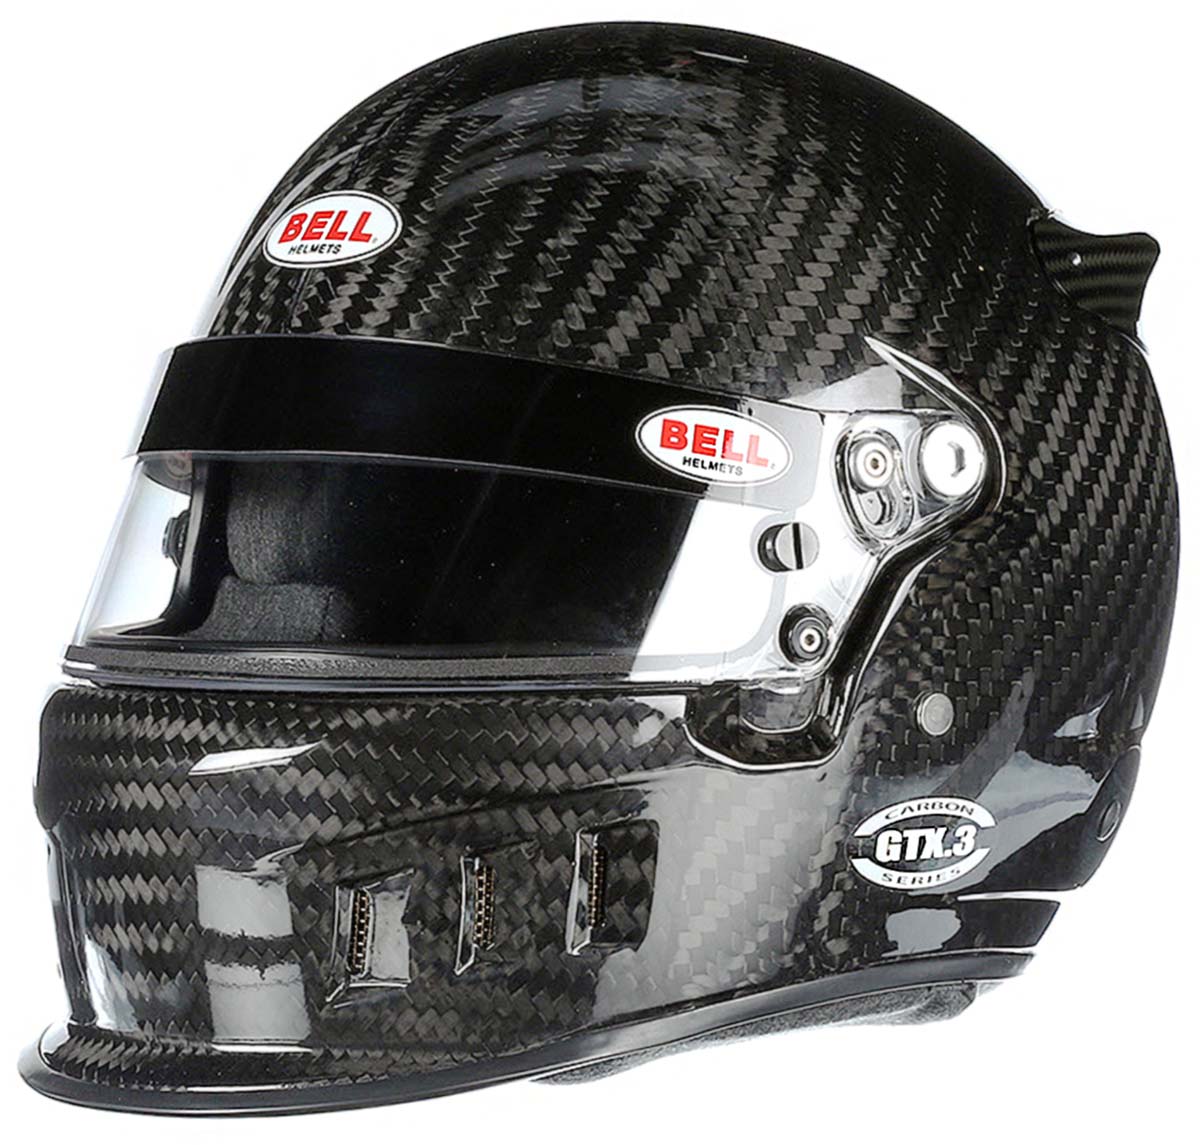 Bell GTX.3 Carbon Fiber Helmet SA2020 Front View Image